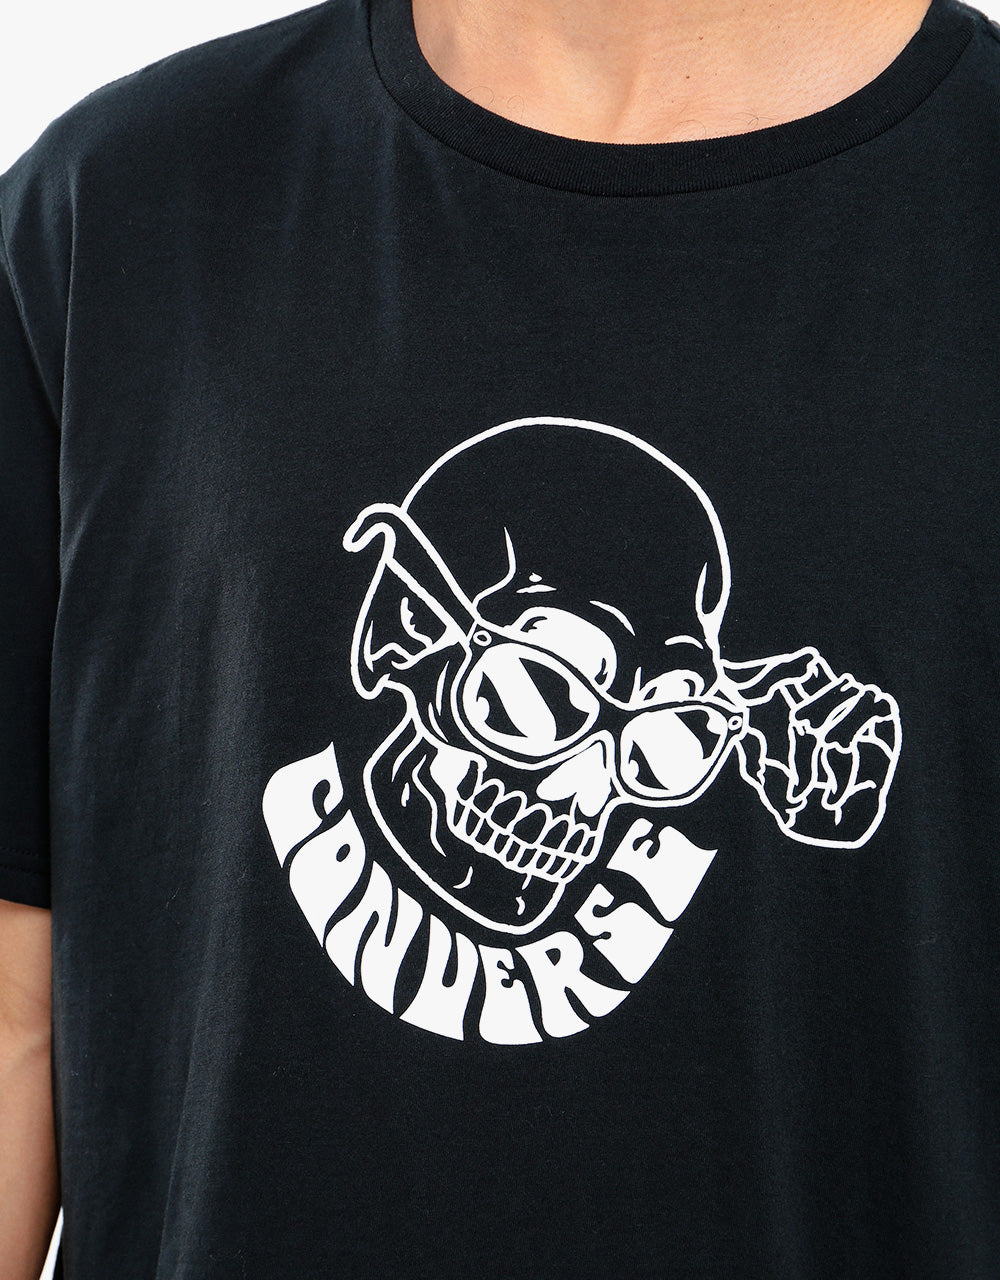 Converse Cool Bones Graphic T-Shirt - Converse Black